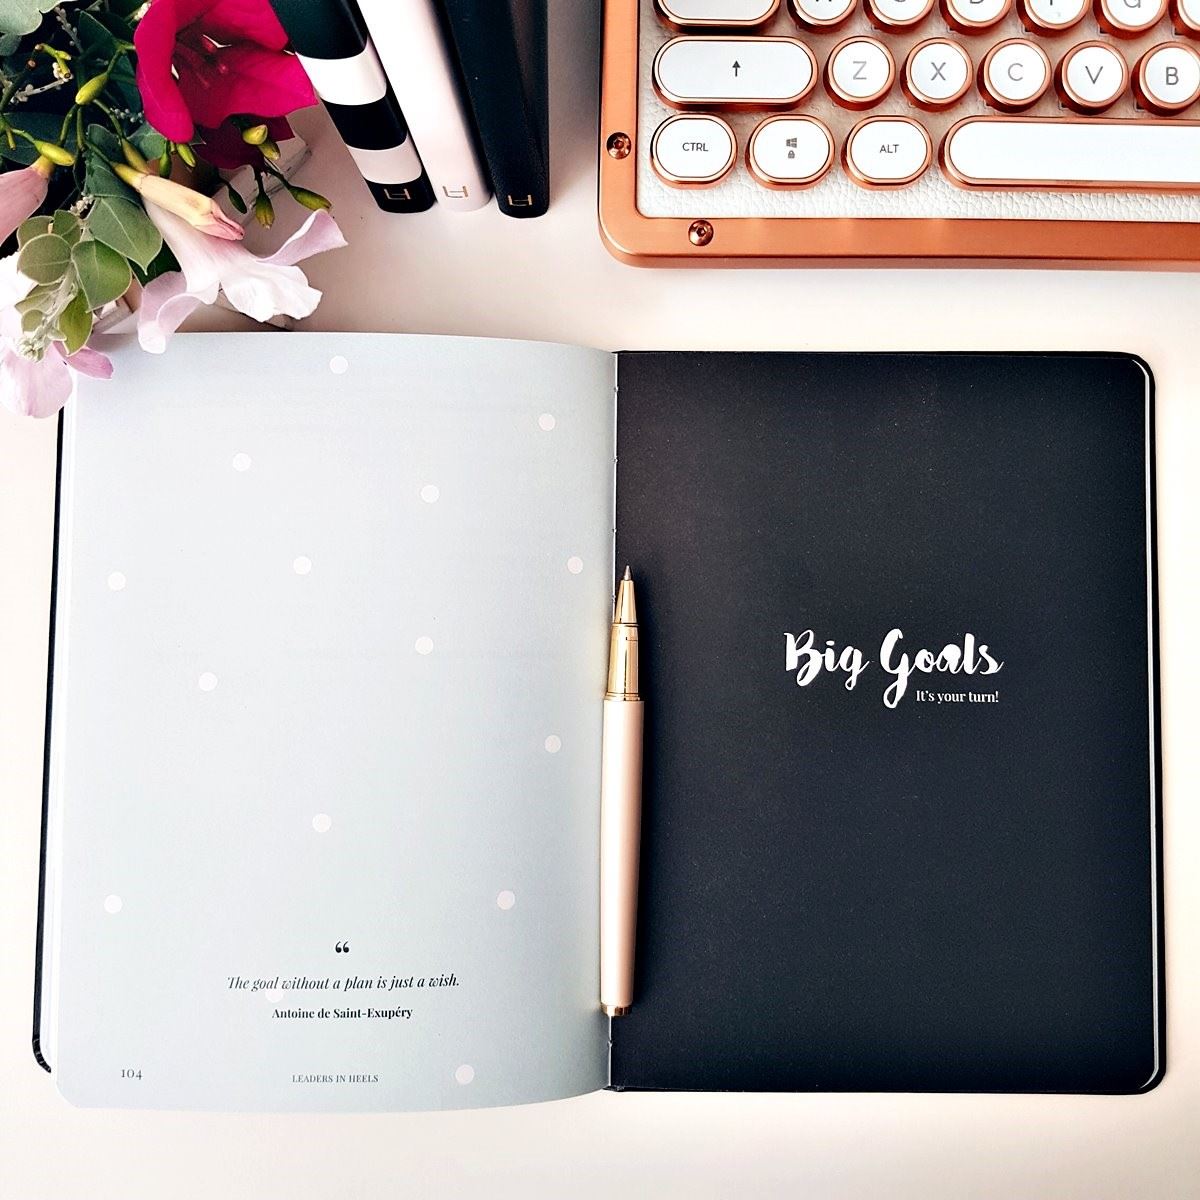 Make Your Mark Self-Coaching Journal